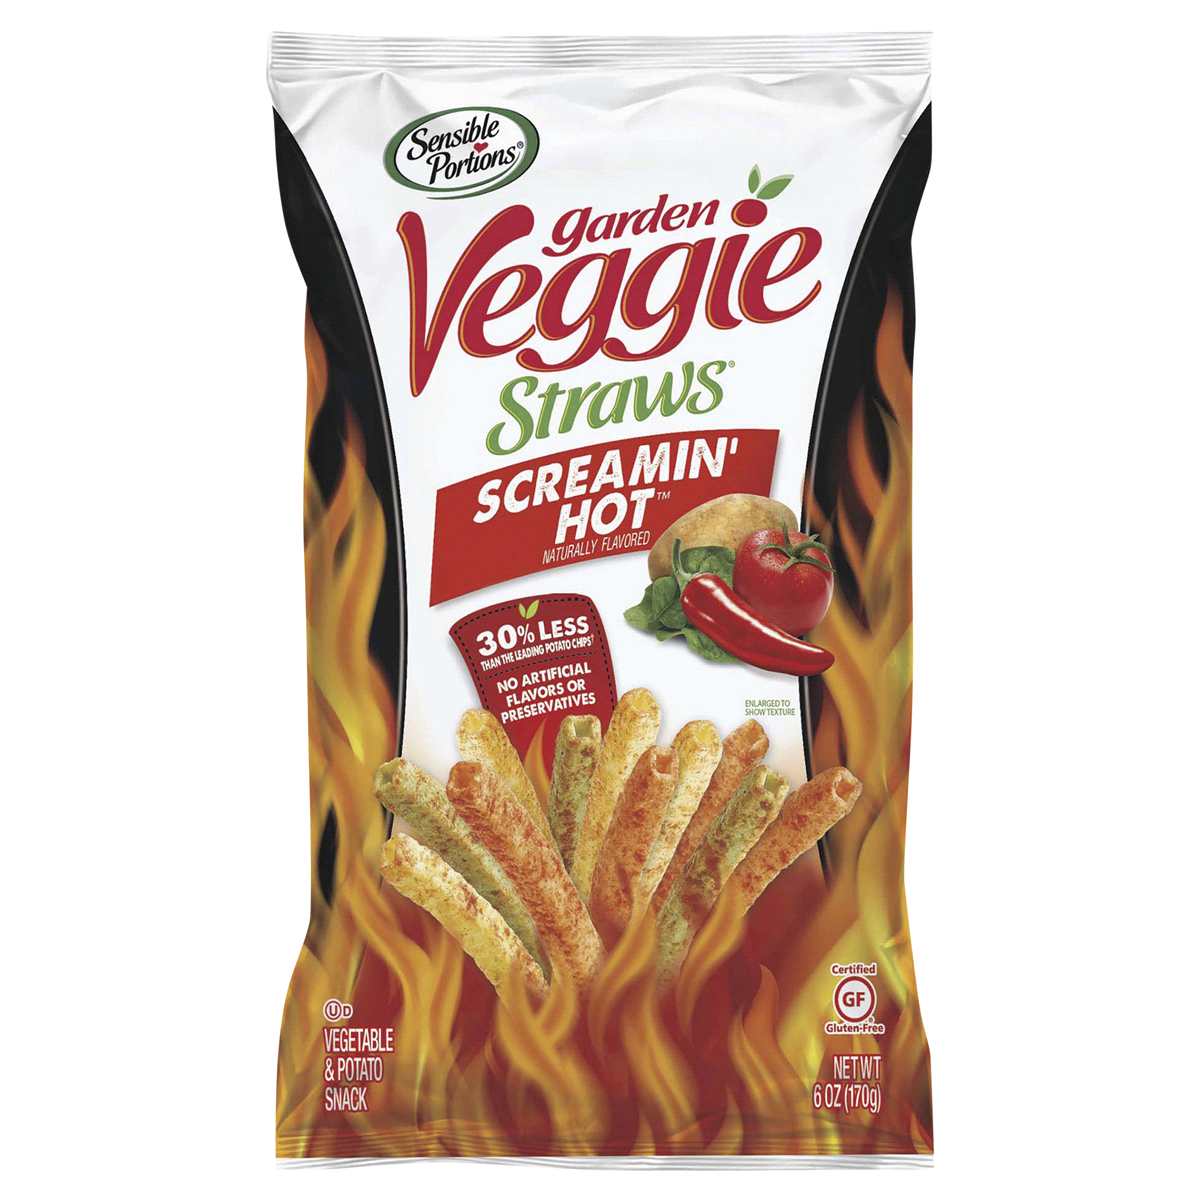 slide 1 of 5, Sensible Portions Garden Veggie Straws Screamin' Hot Vegetable & Potato Snack 6 oz. Bag, 6 oz